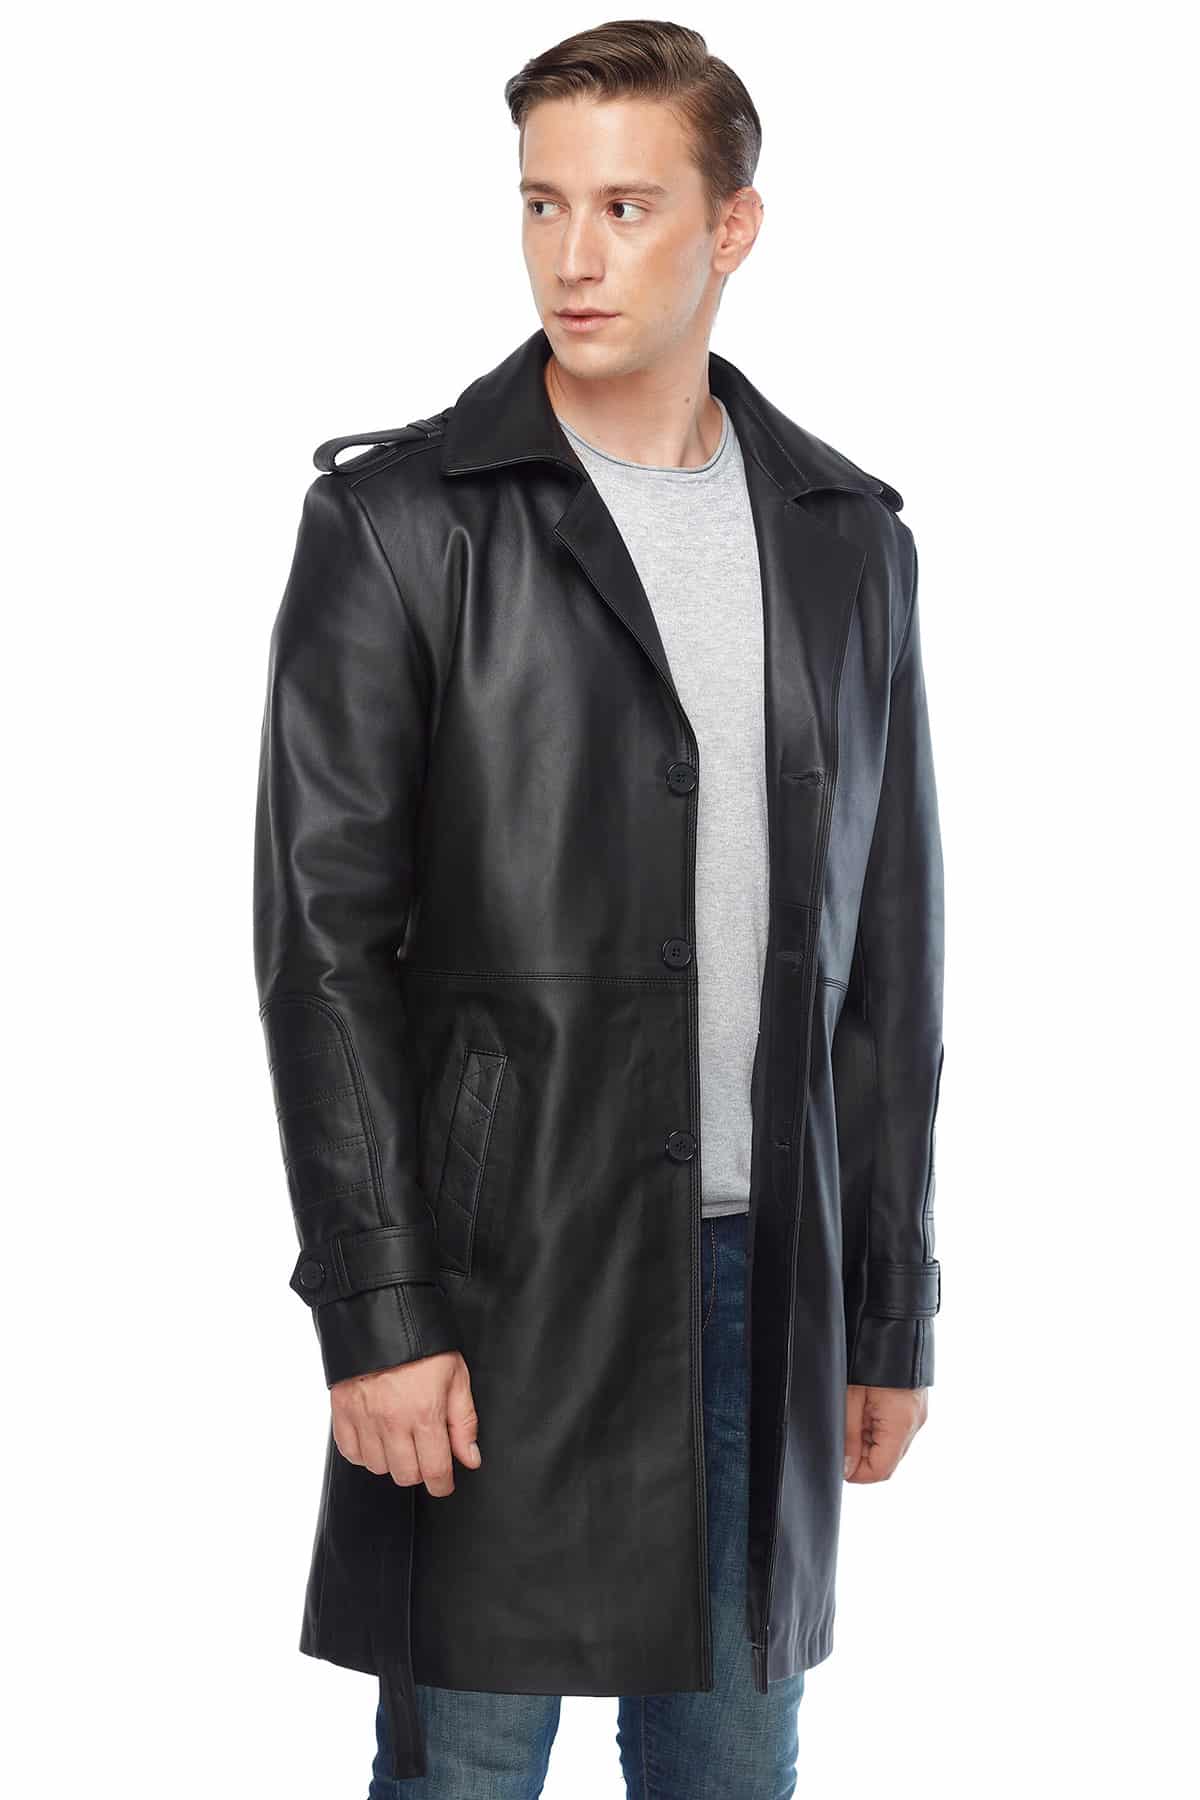 Daniel Men's 100 % Real Black Leather Topcoat